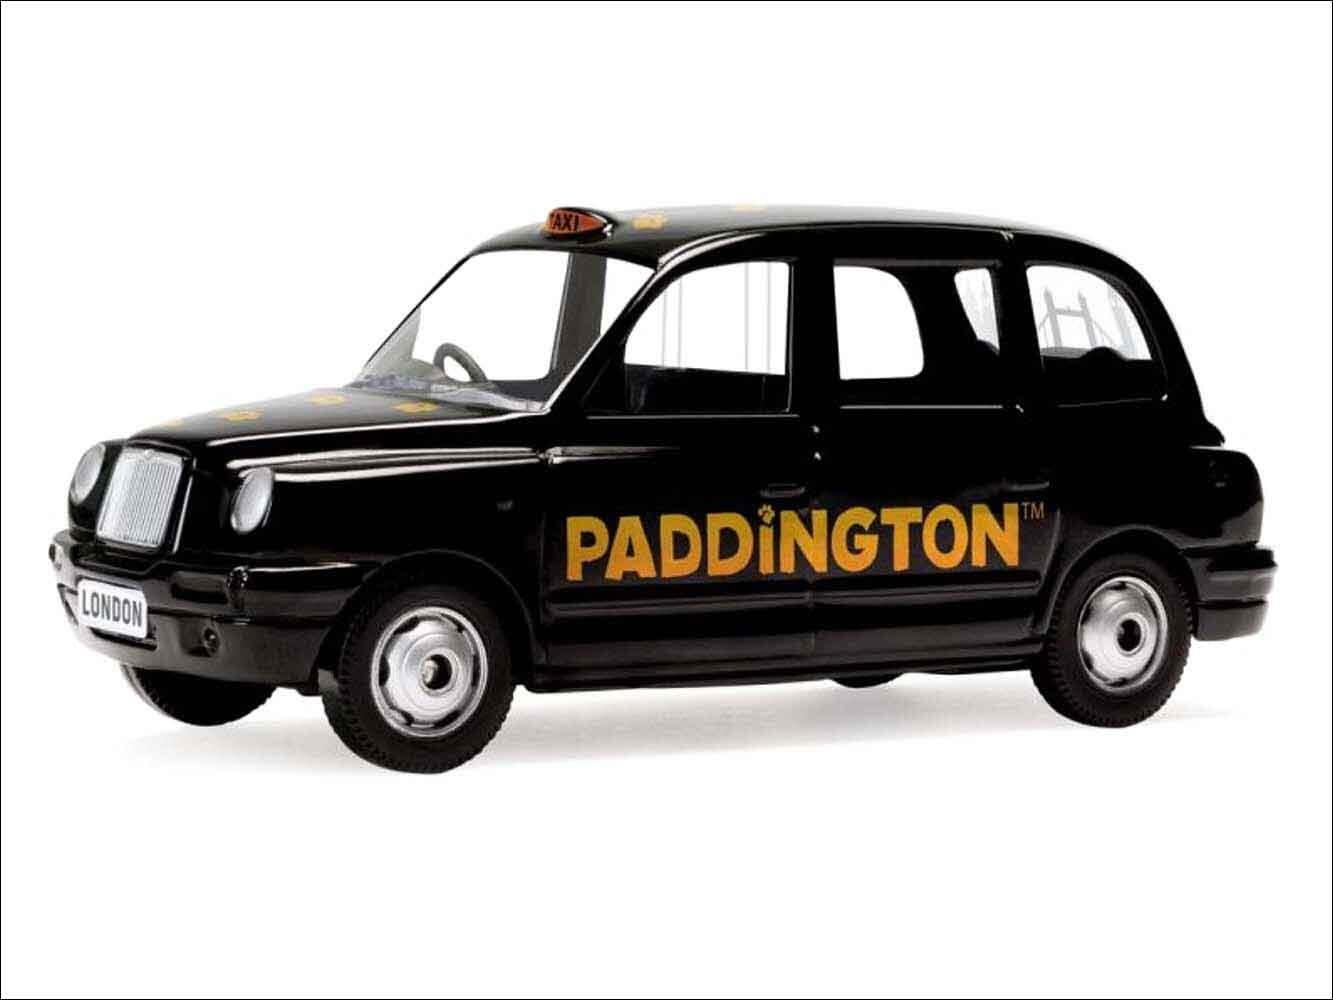 Paddington Bear London Taxi and Paddington Bear Figure